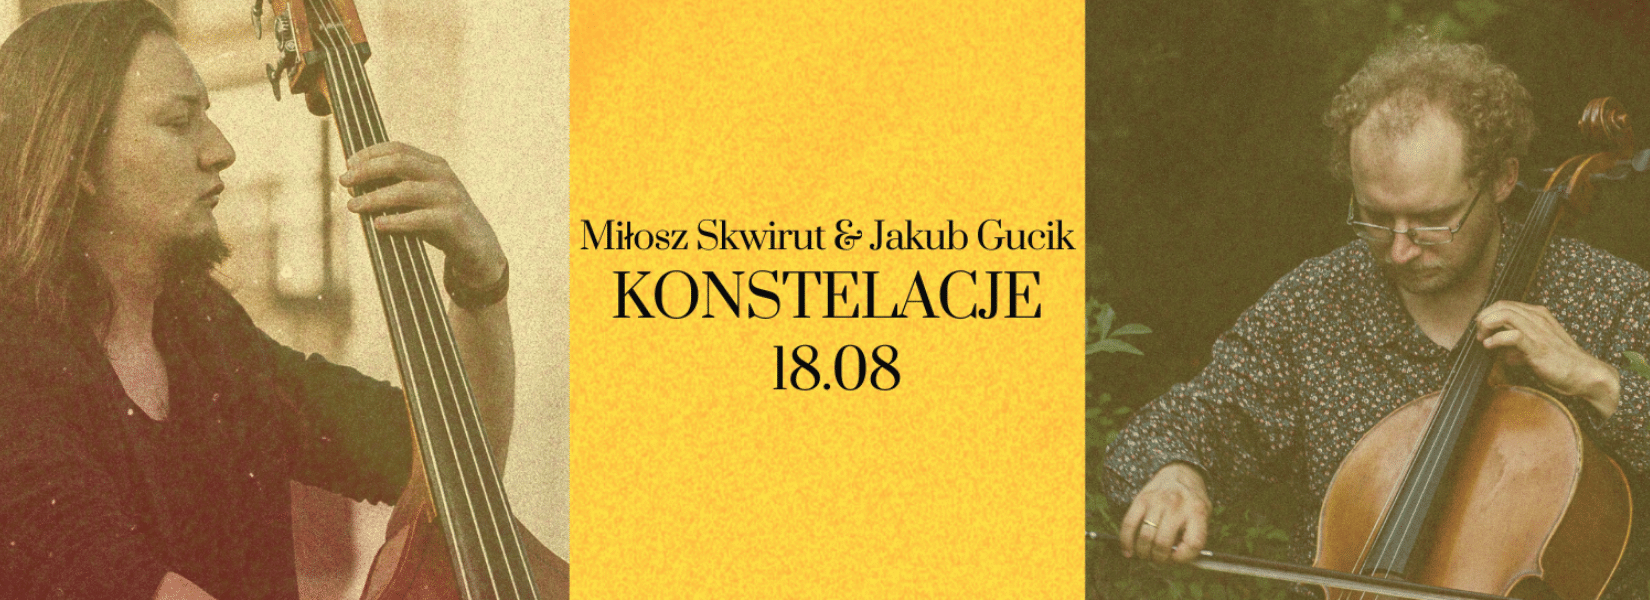 Miłosz Skwirut i Jakub Gucik | Konstelacje